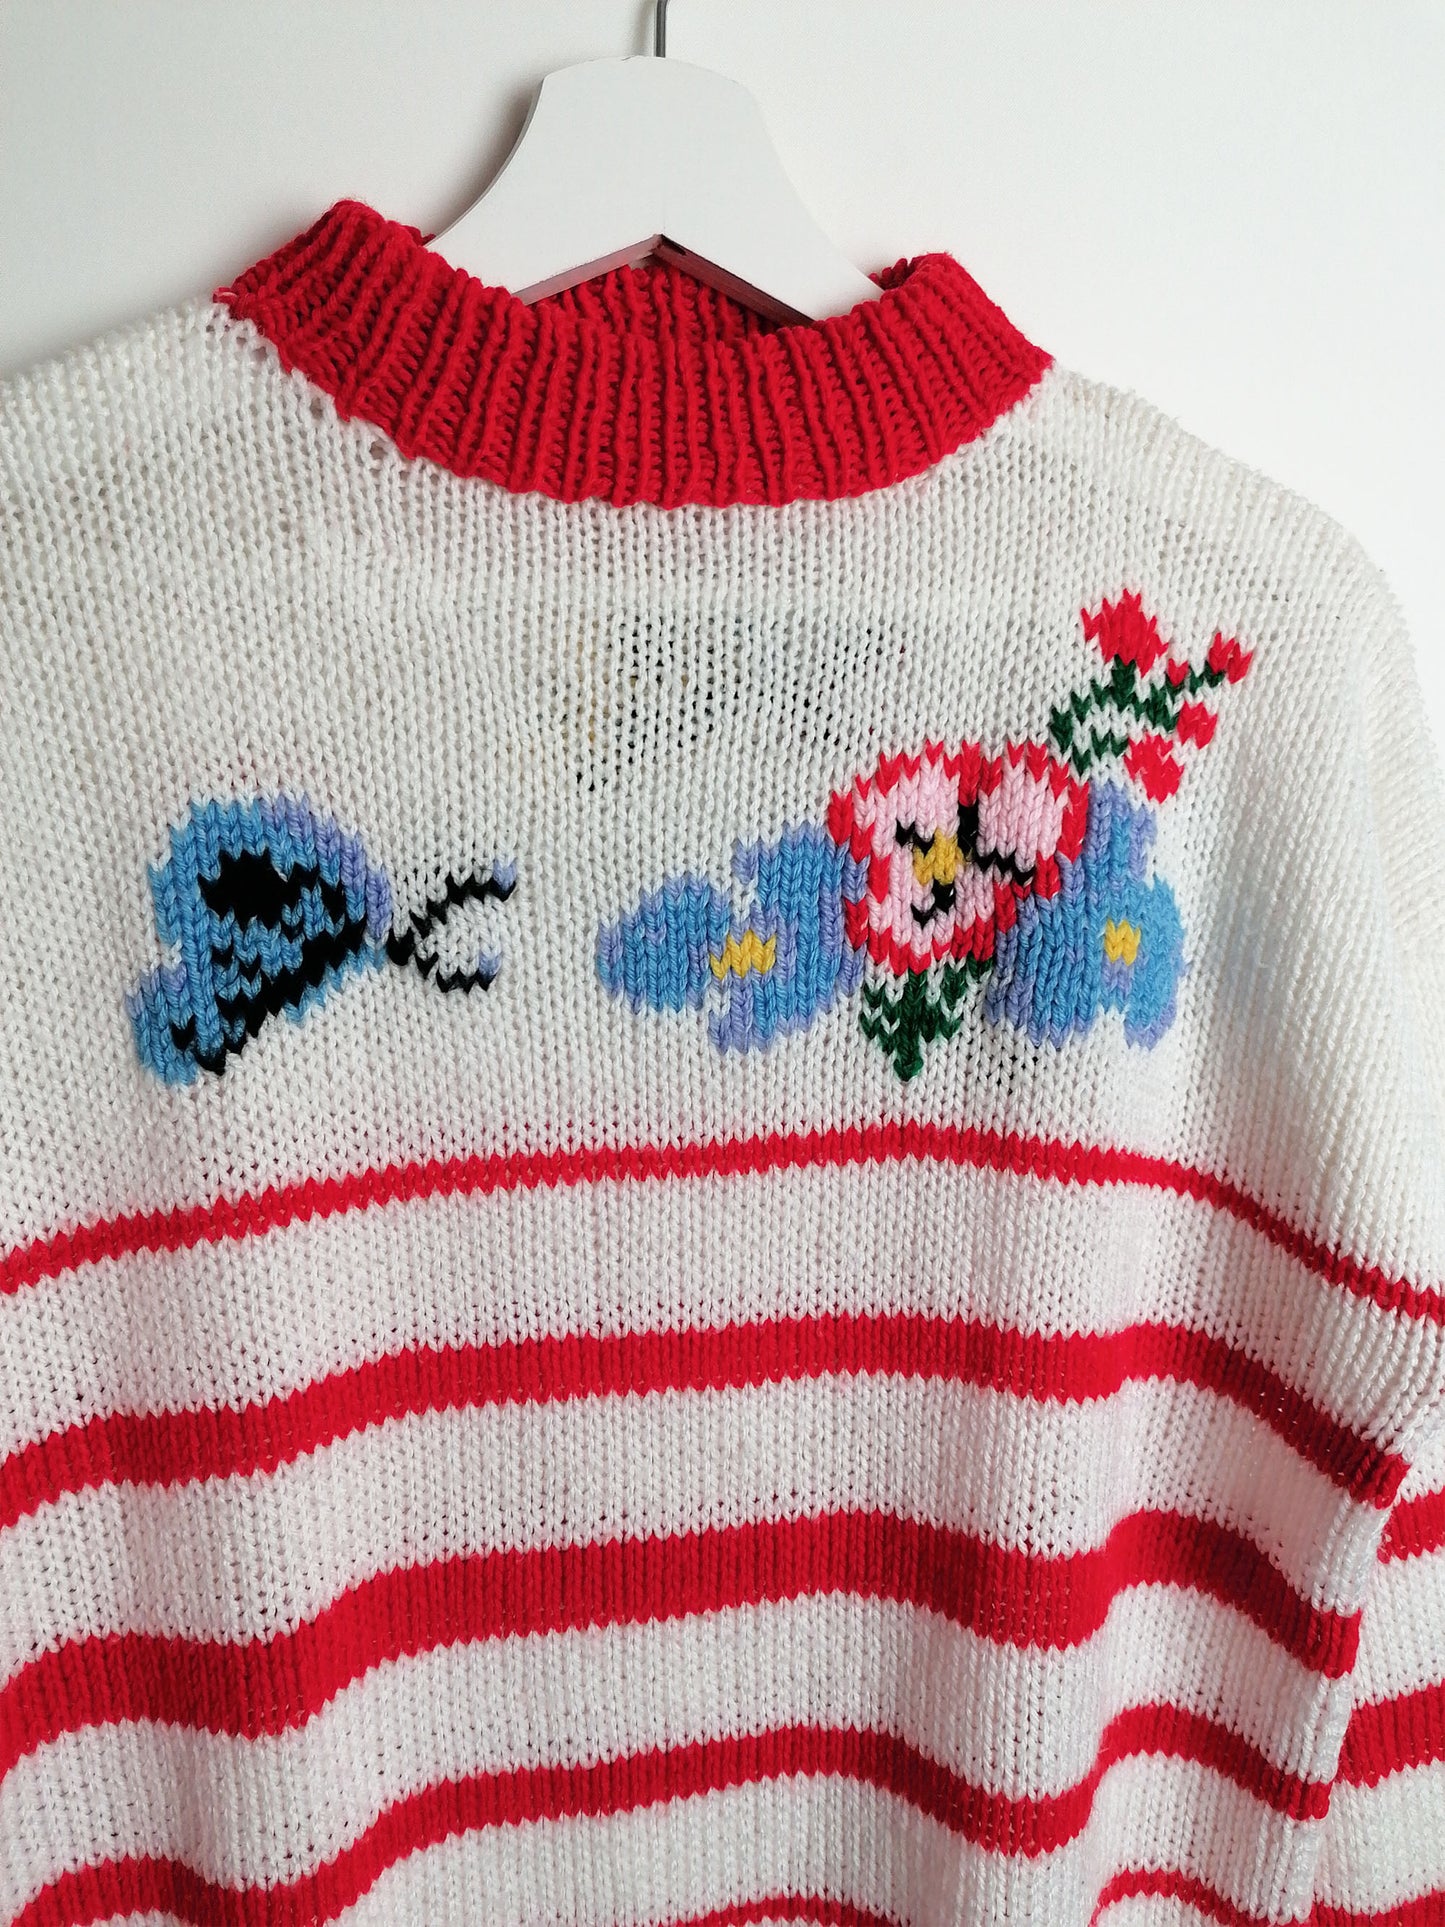 80's Handmade Knit Sweater Butterflies Flowers - size S-M